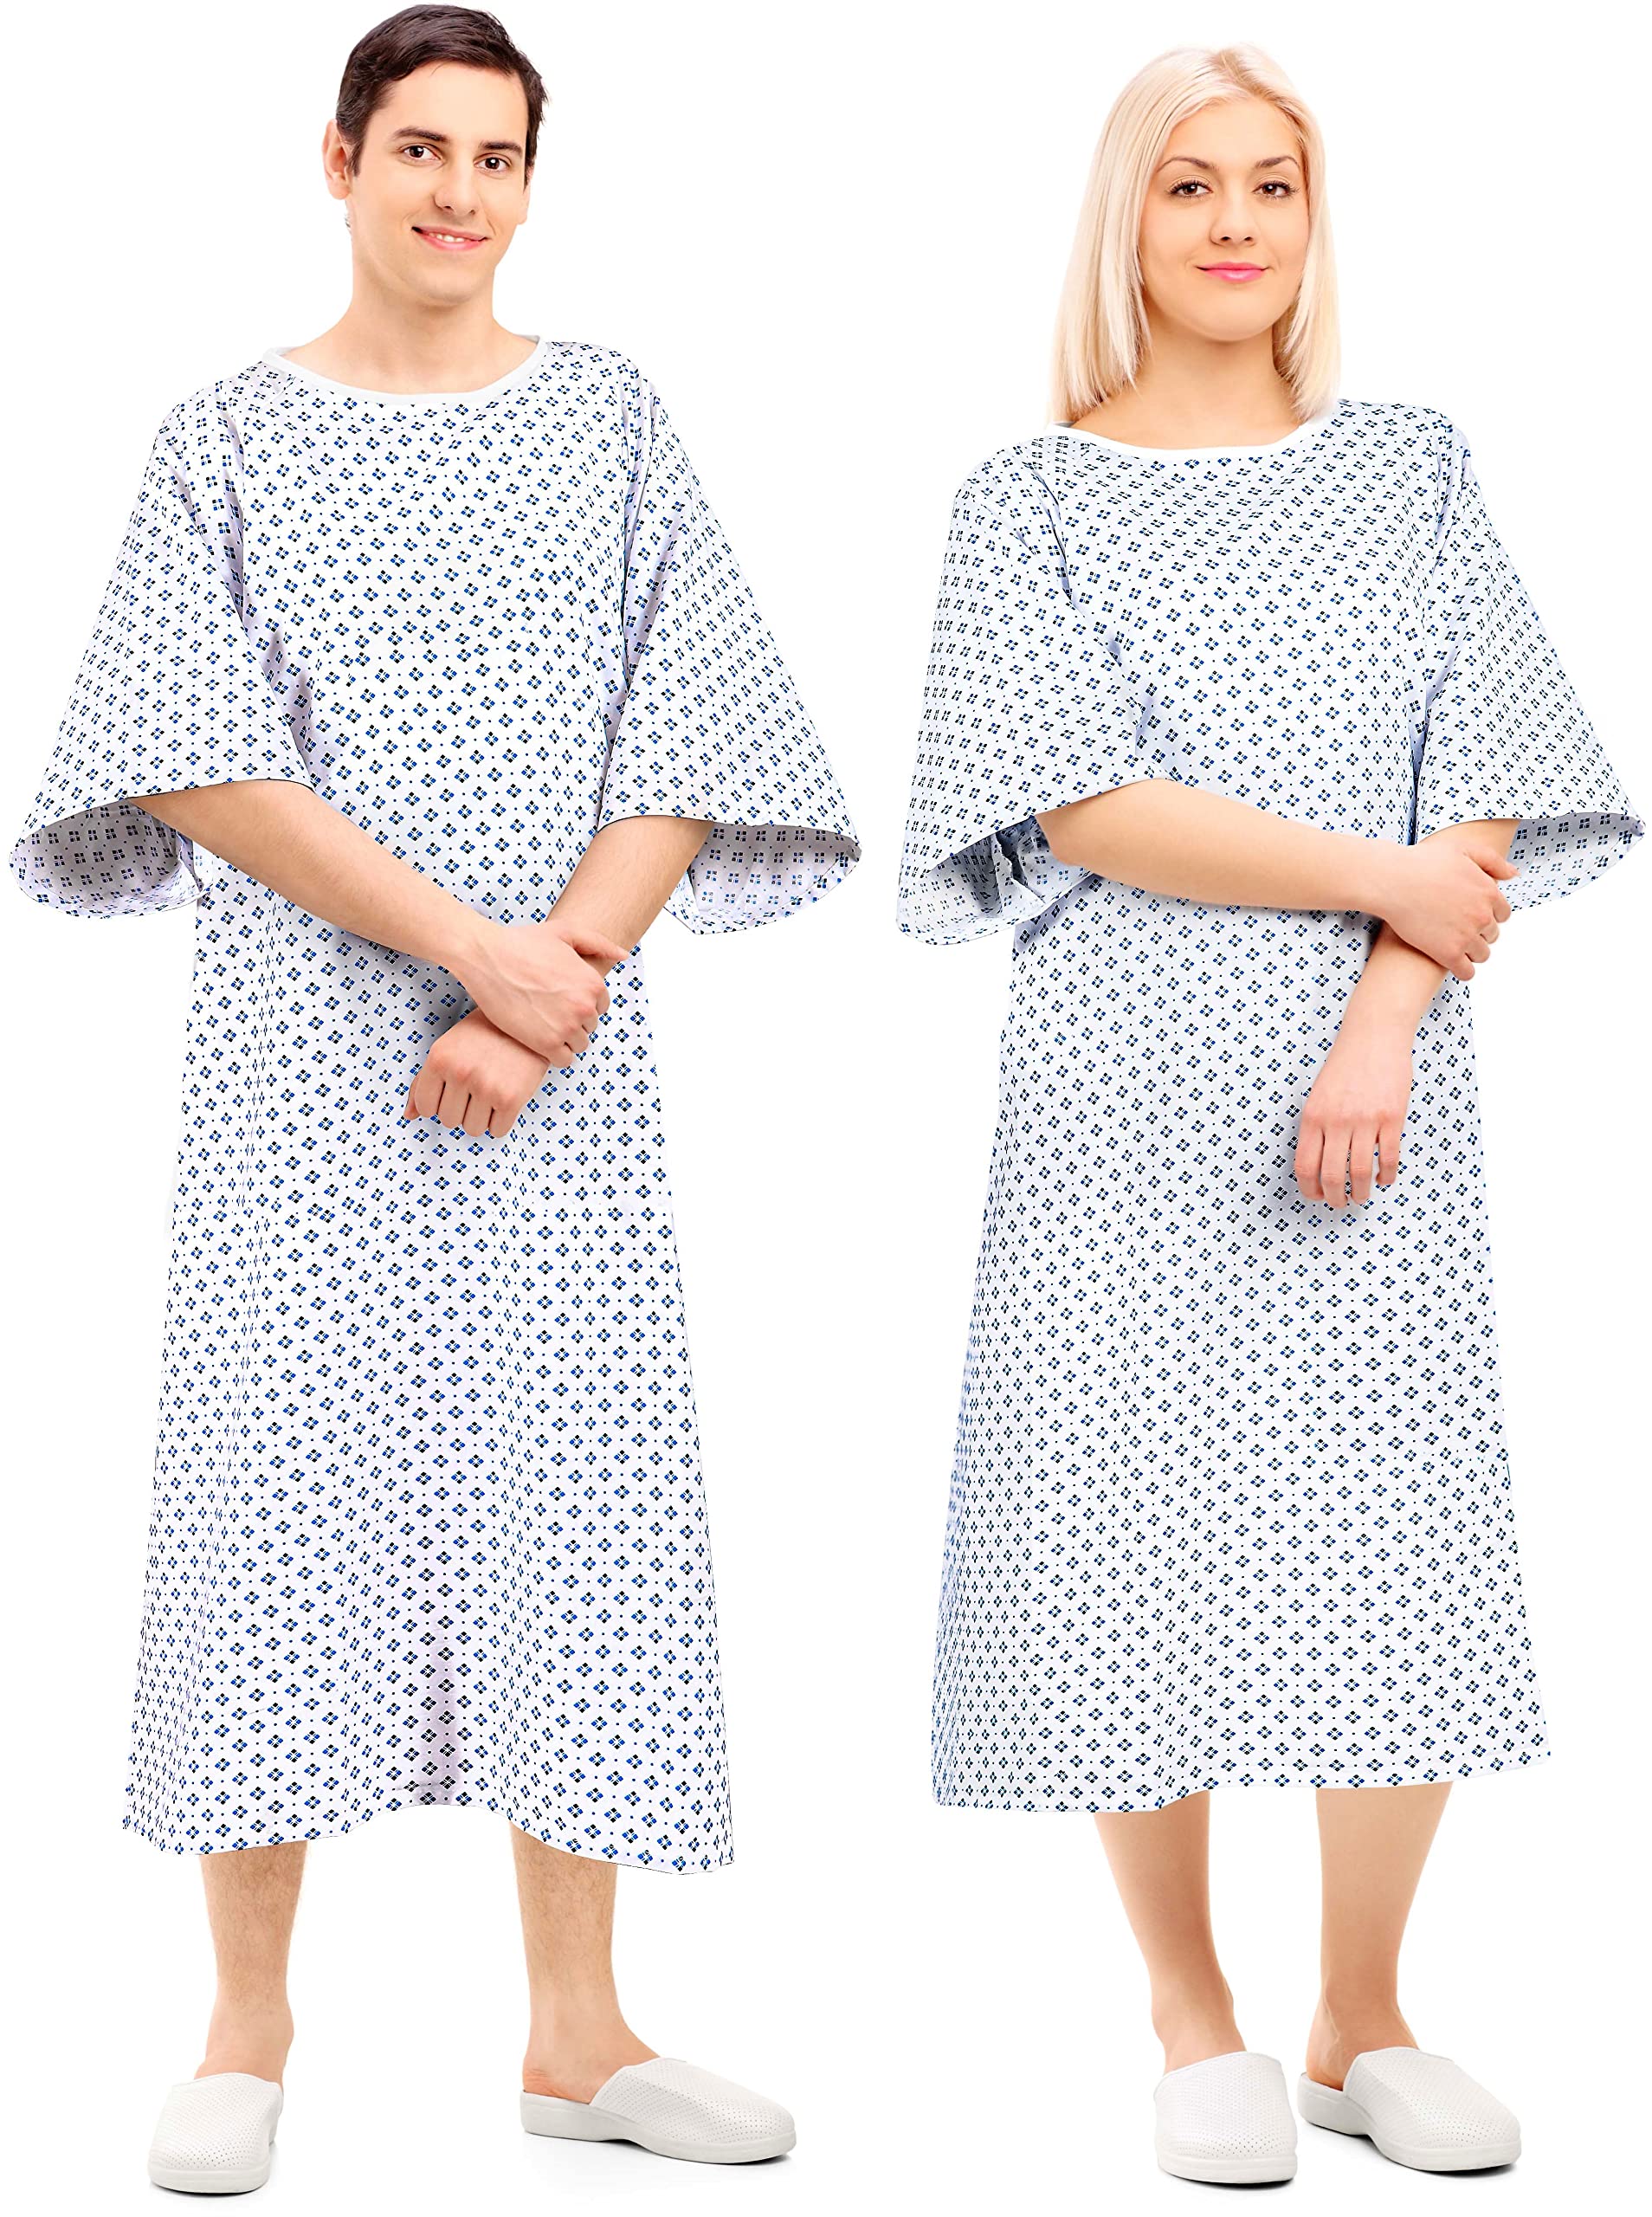 Patient Gowns and Patient Apparel - MEDtegrity Healthcare Linen & Uniform  Services